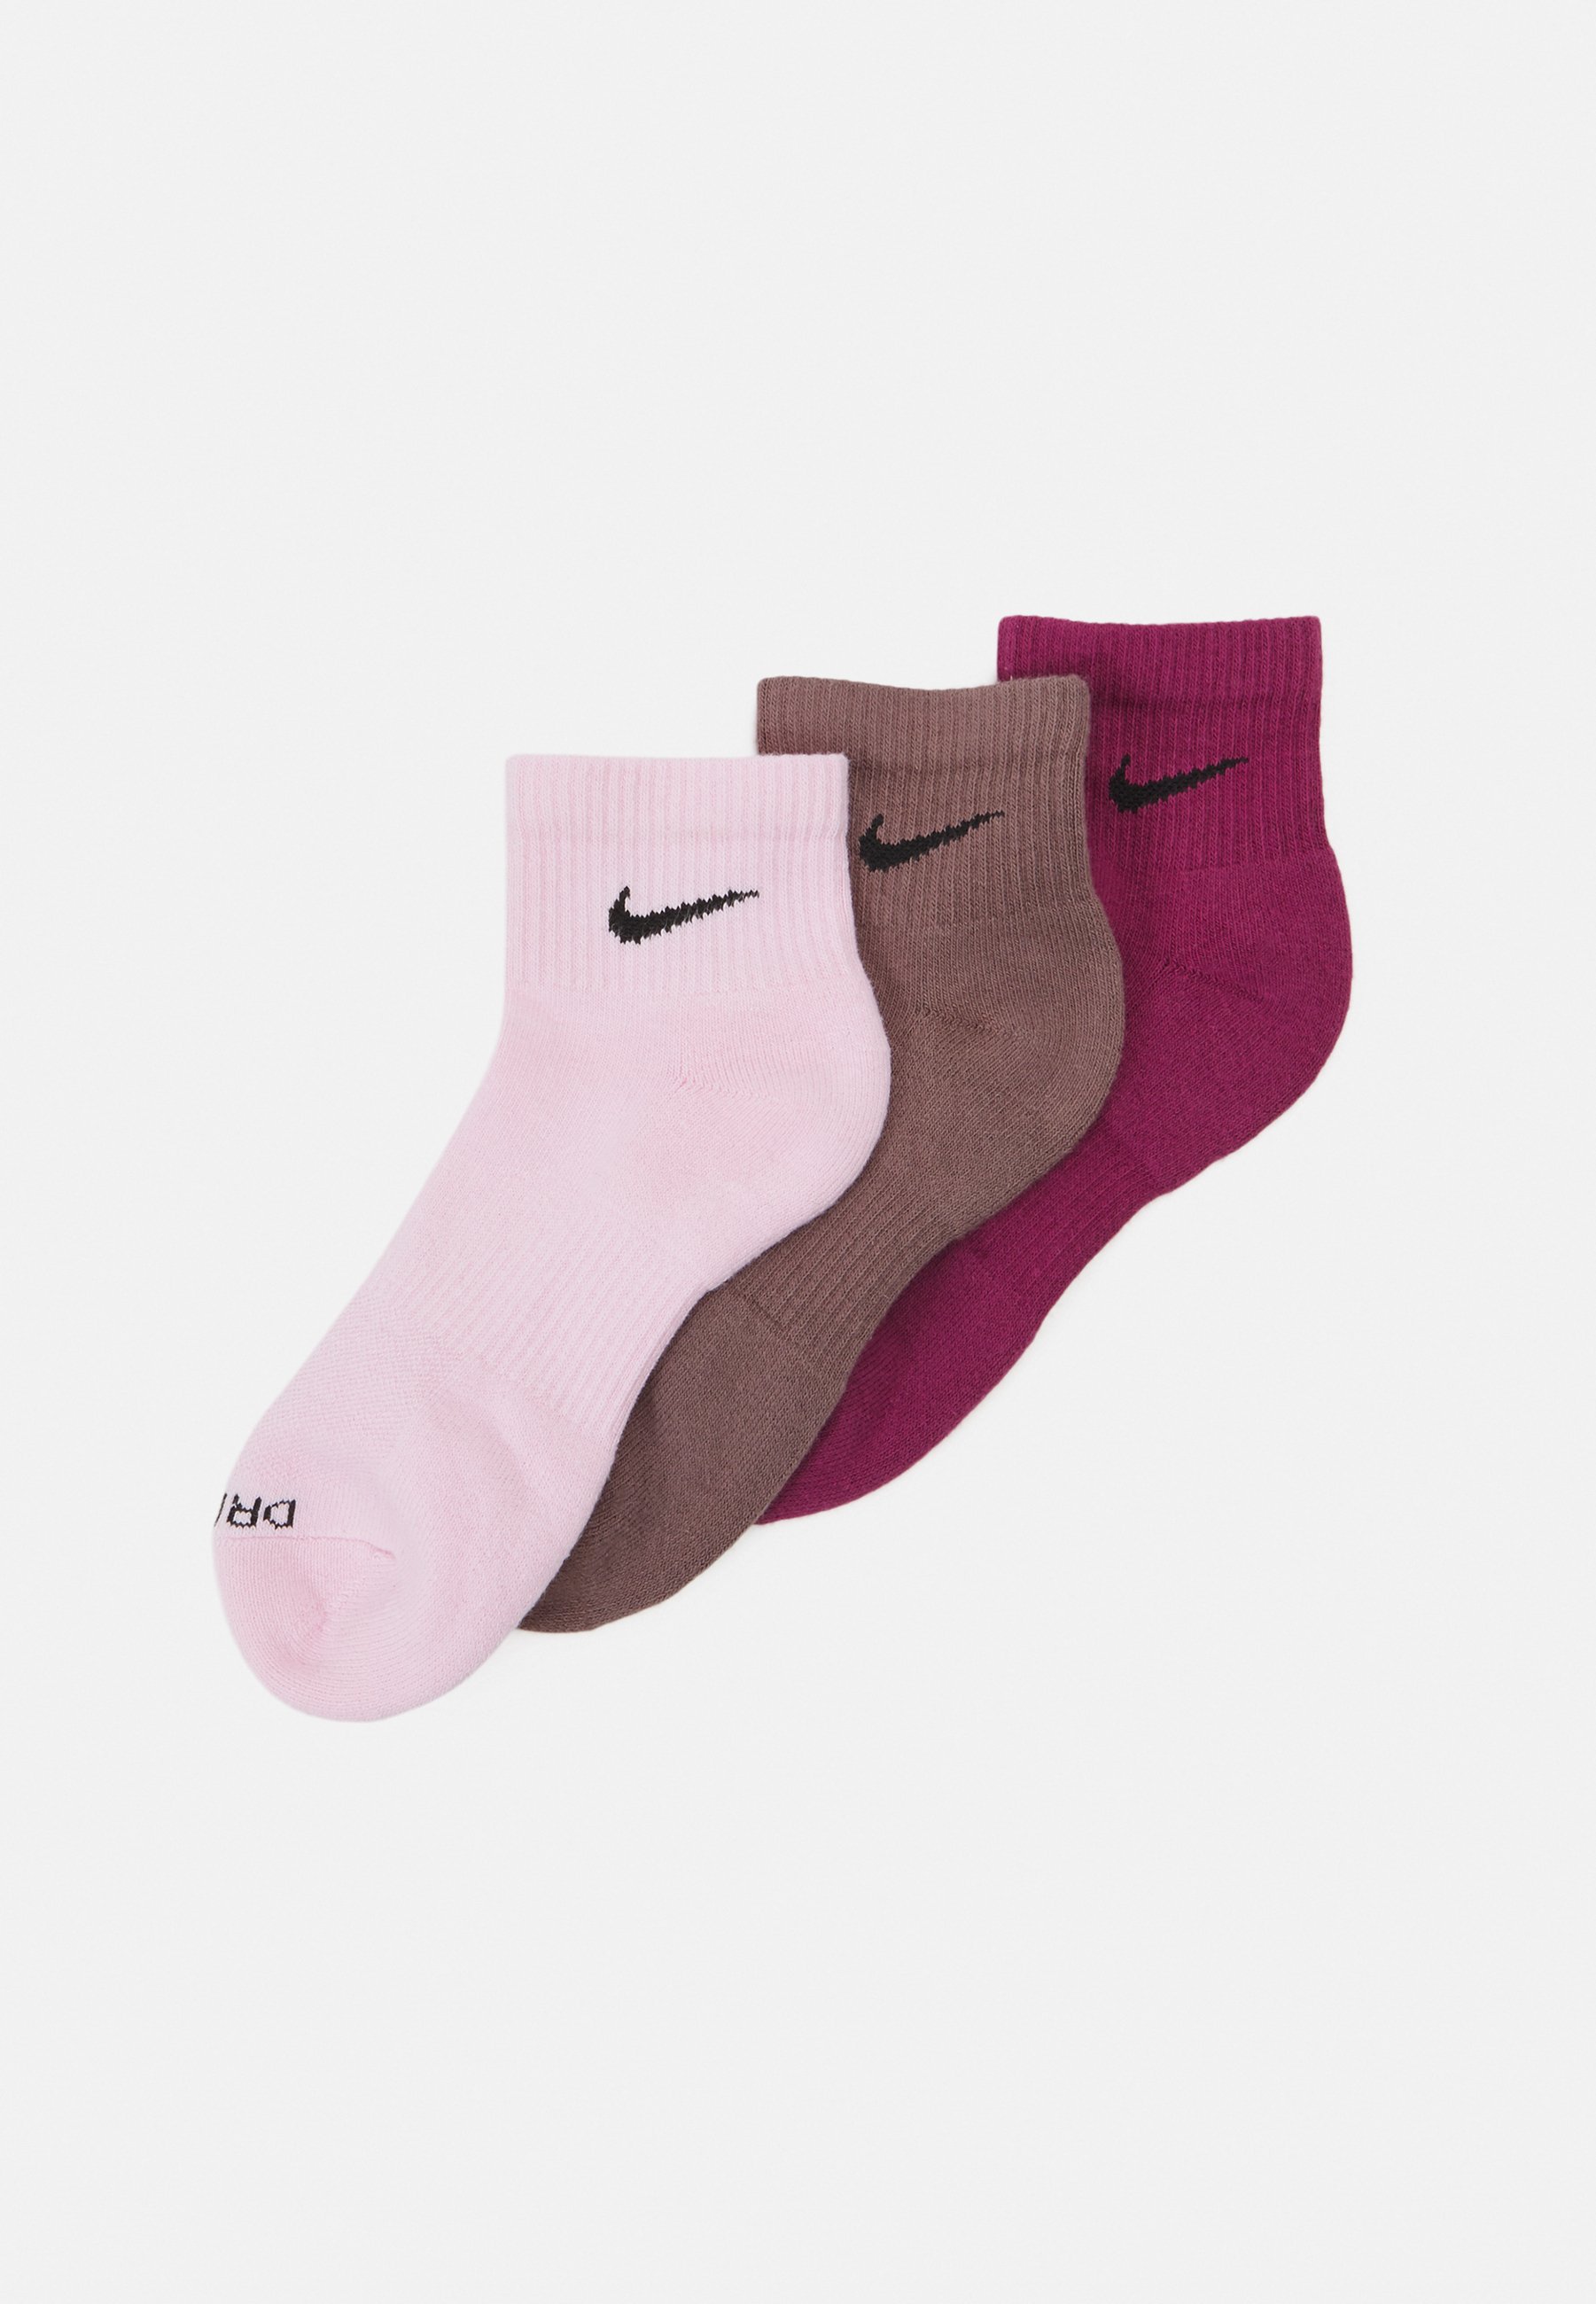 Pink Nike Ankle Socks toilet whores